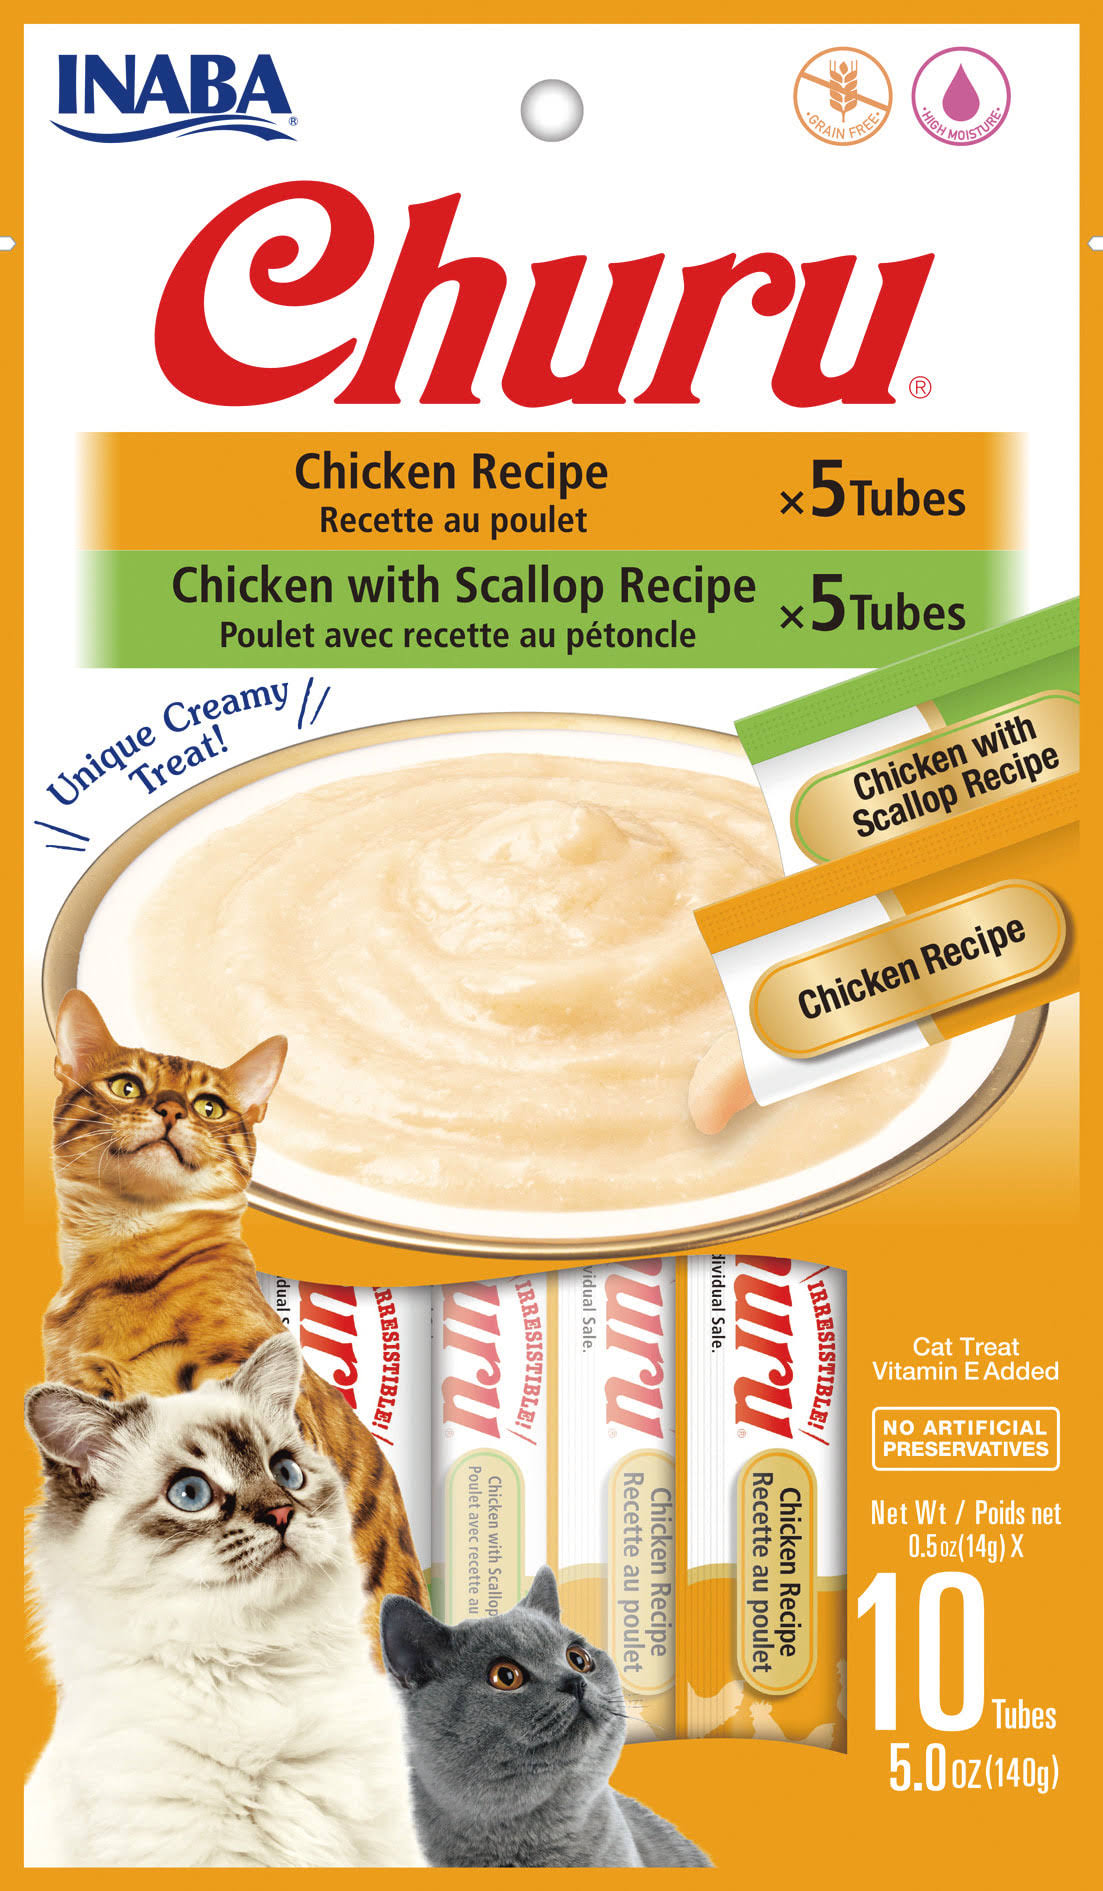 Inaba INA00715 Churu Chicken & Chicken with Scallop Recipe Variety Creamy Cat Treat - 10 Count